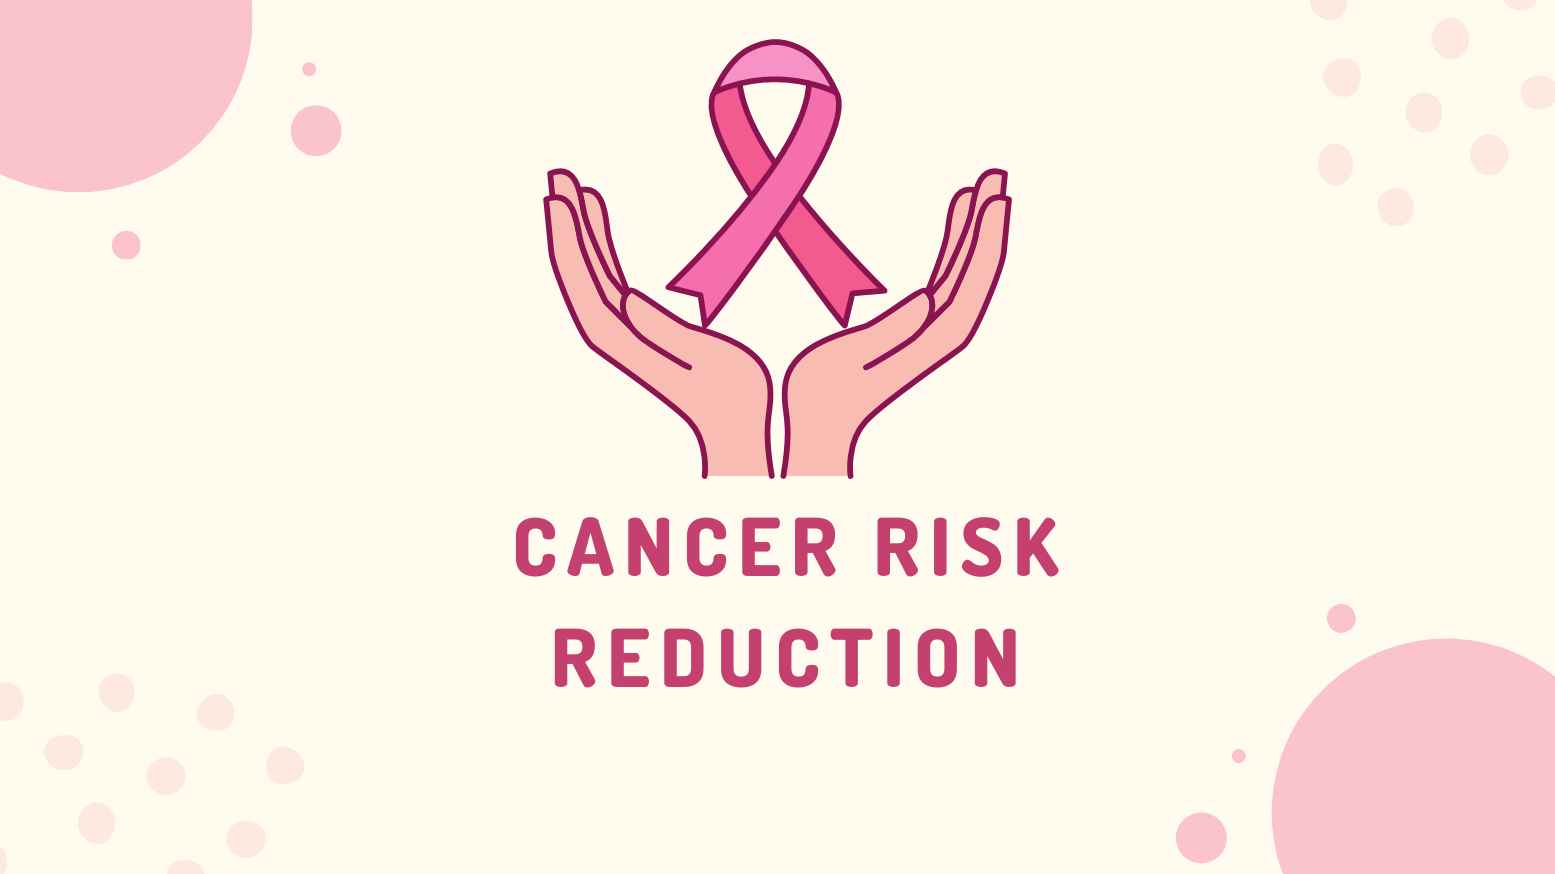 Cancer Risk Reduction